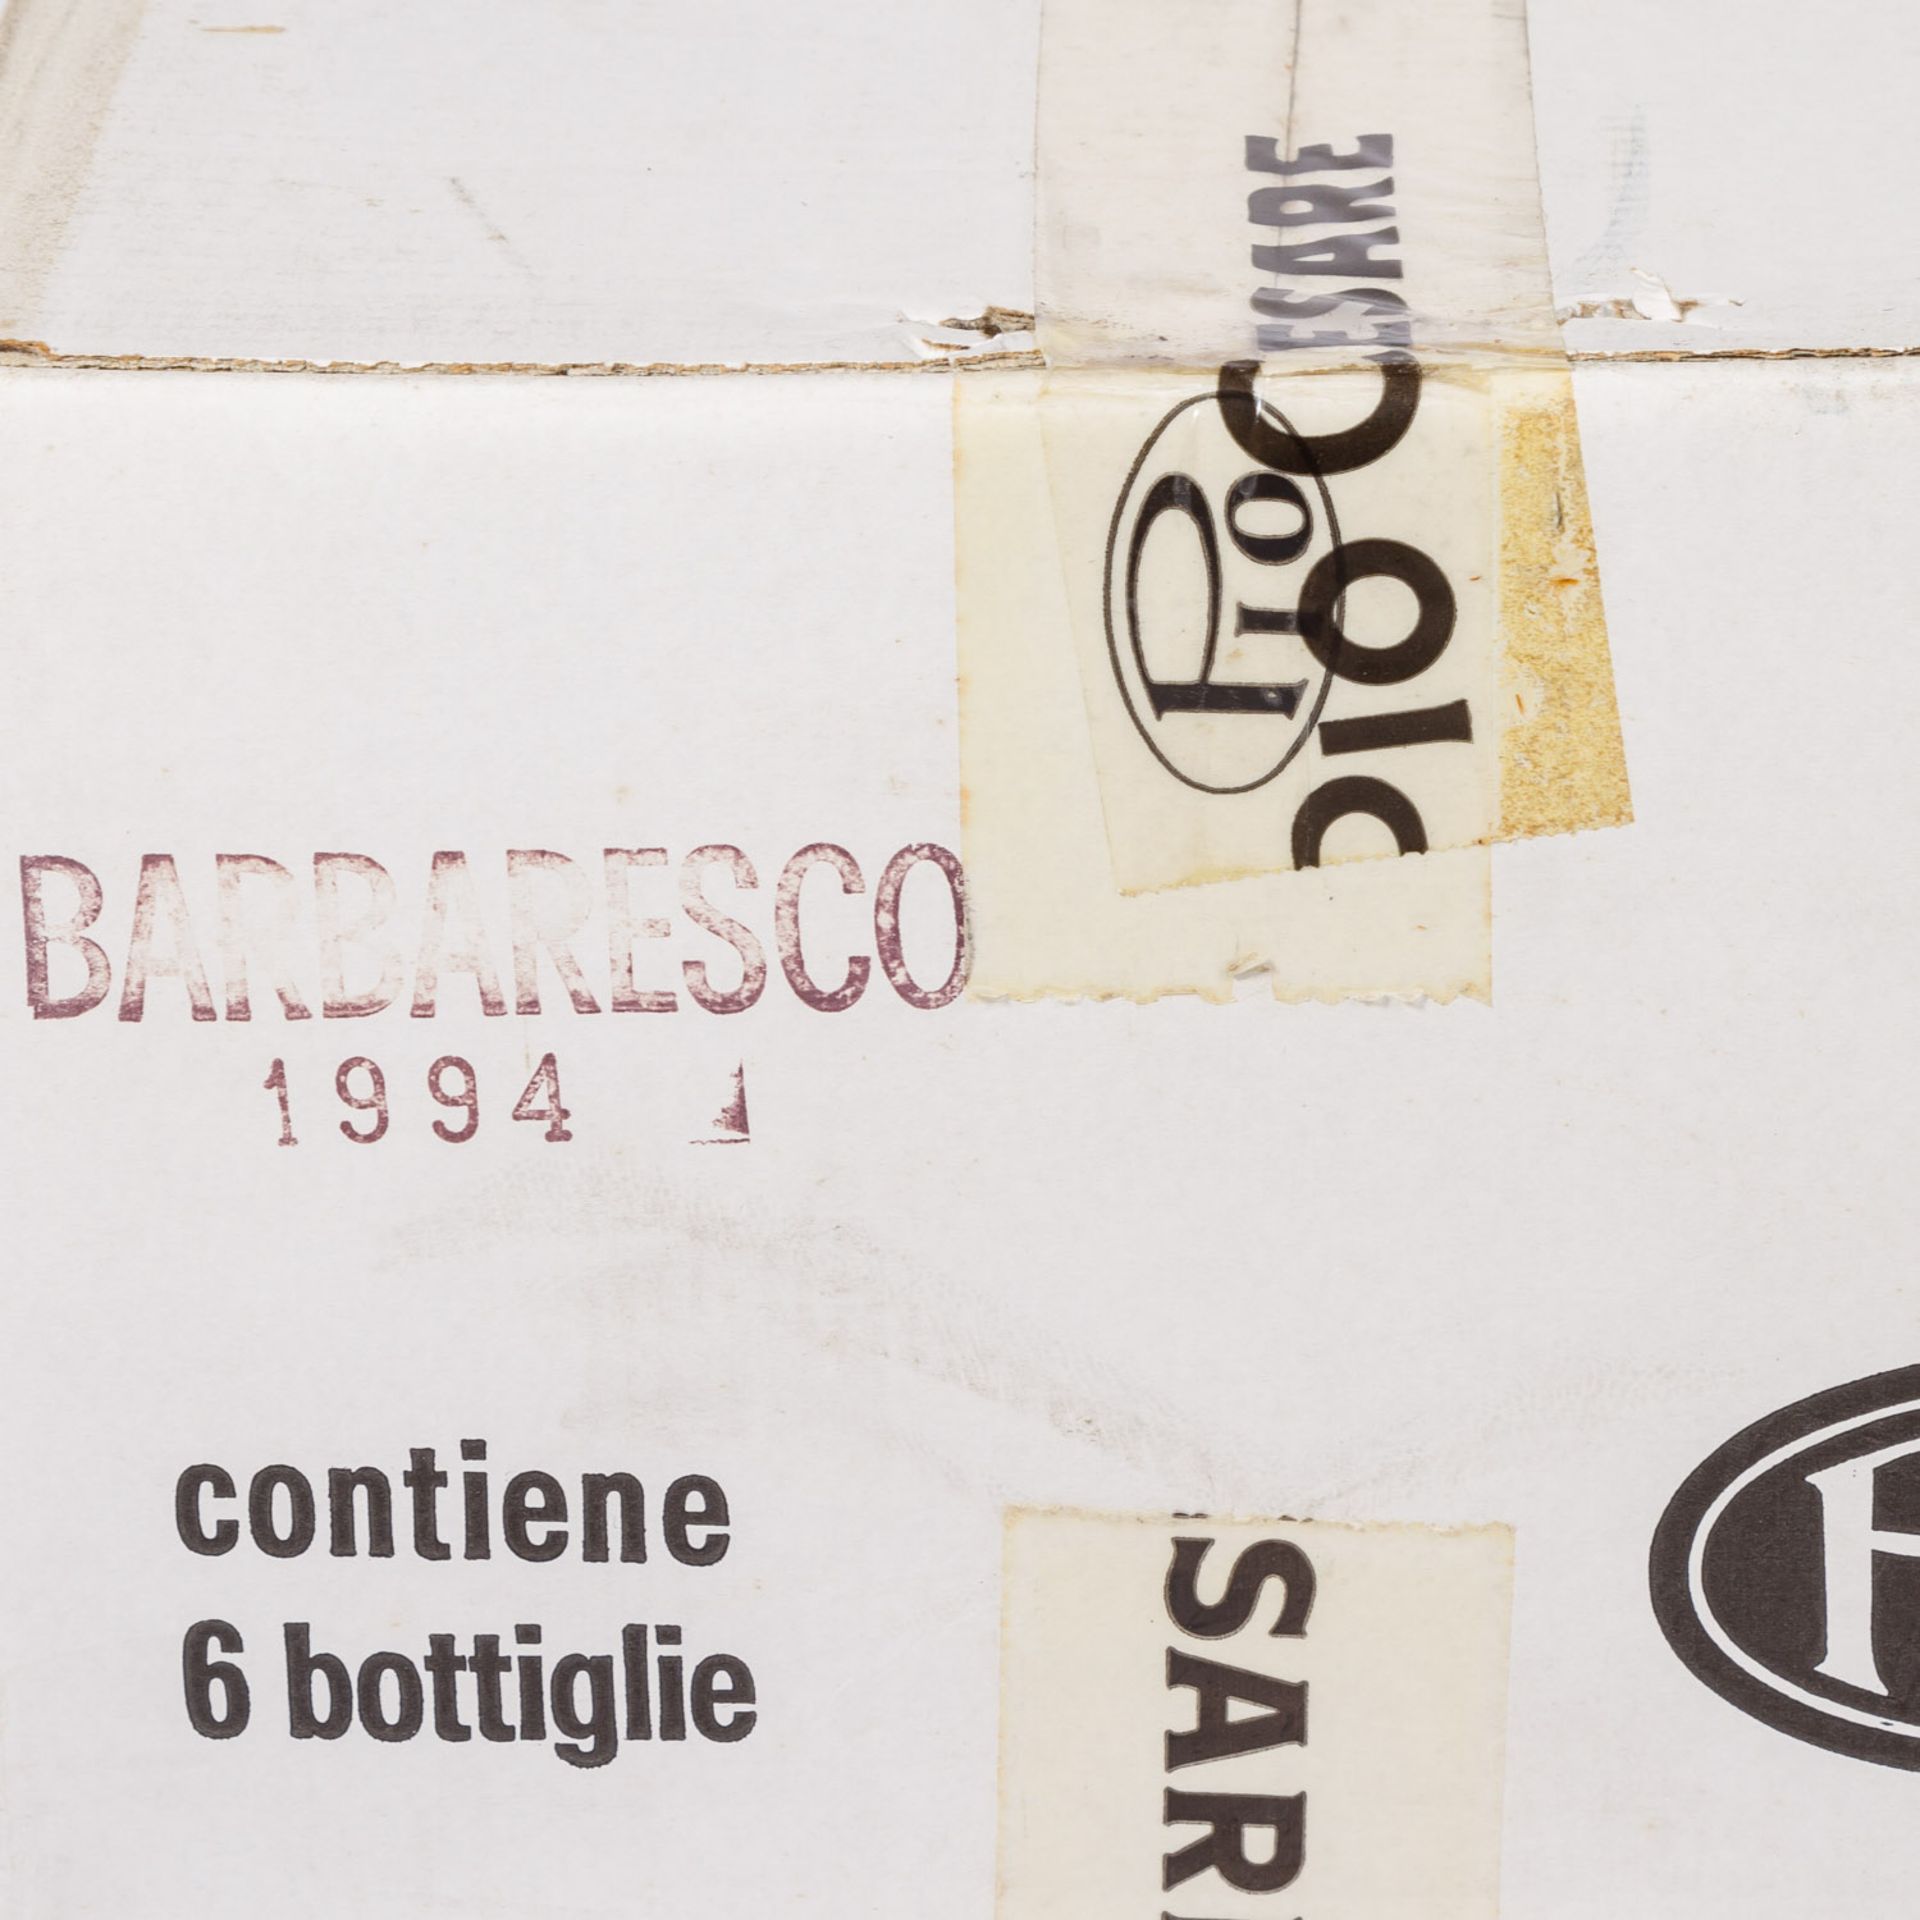 PIO CESARE 6 Flaschen BARBARESCO 1994 - Image 2 of 2